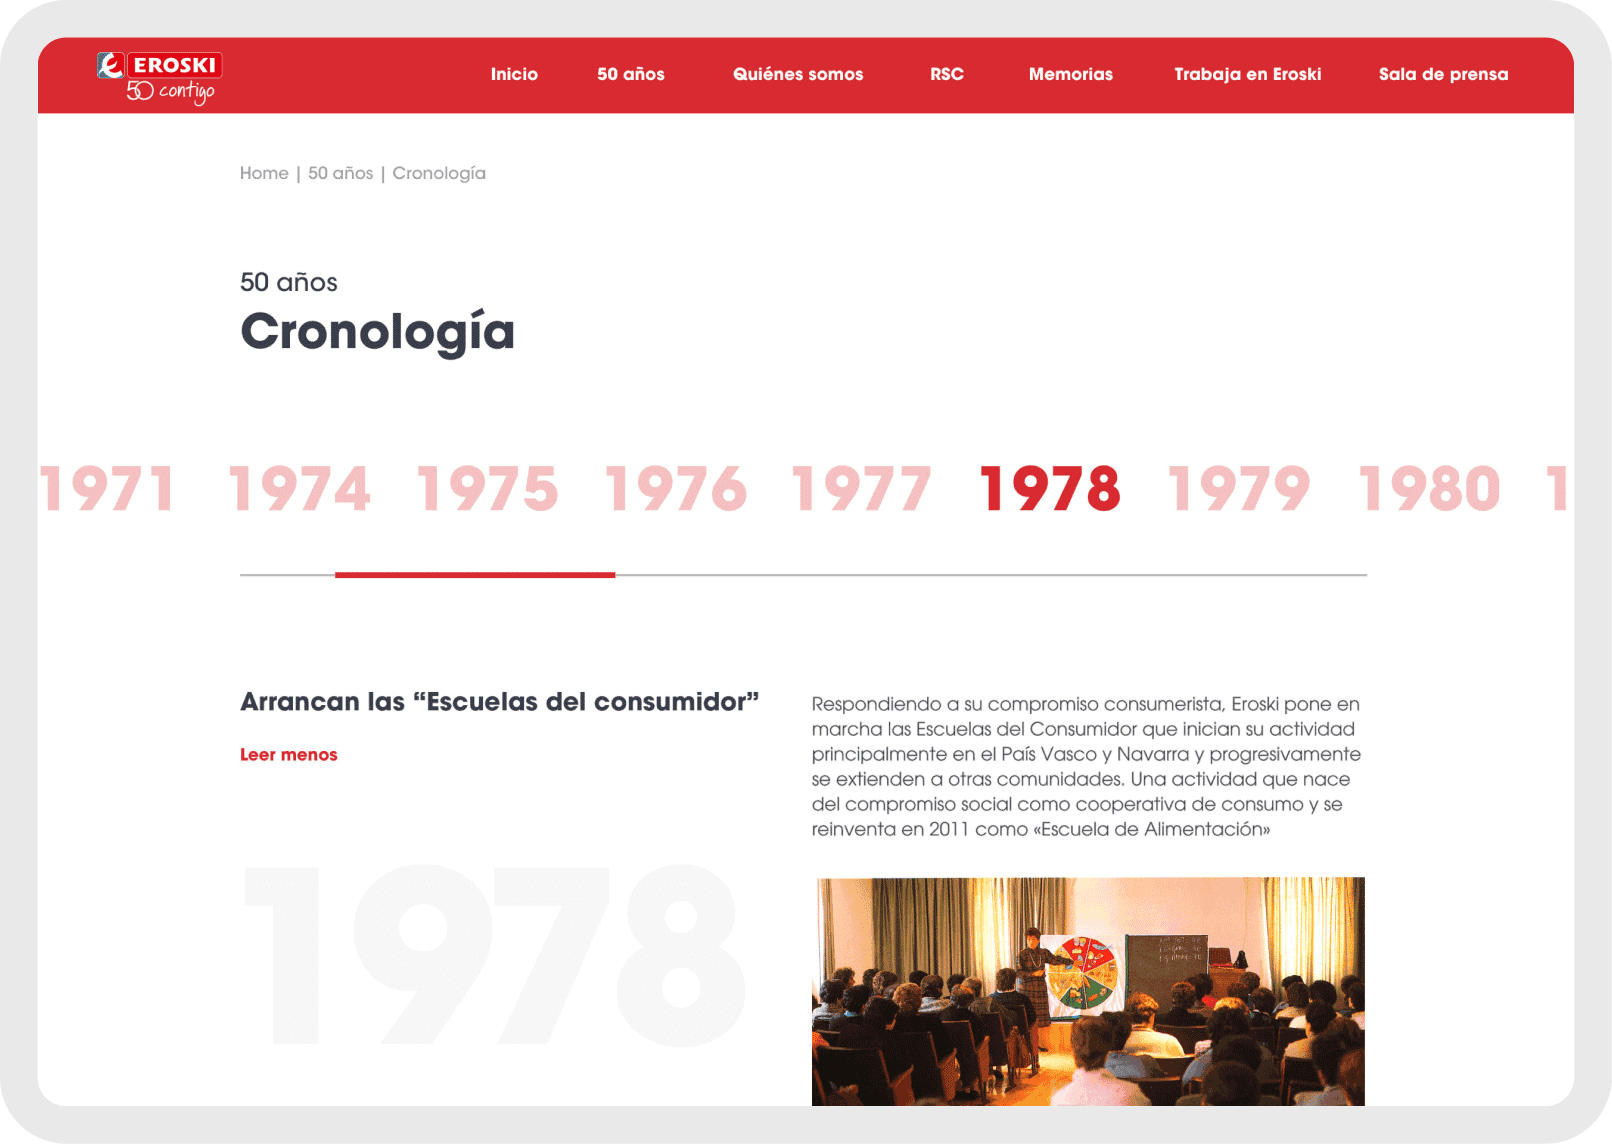 Grupo Eroski web chronology of Eroski's history